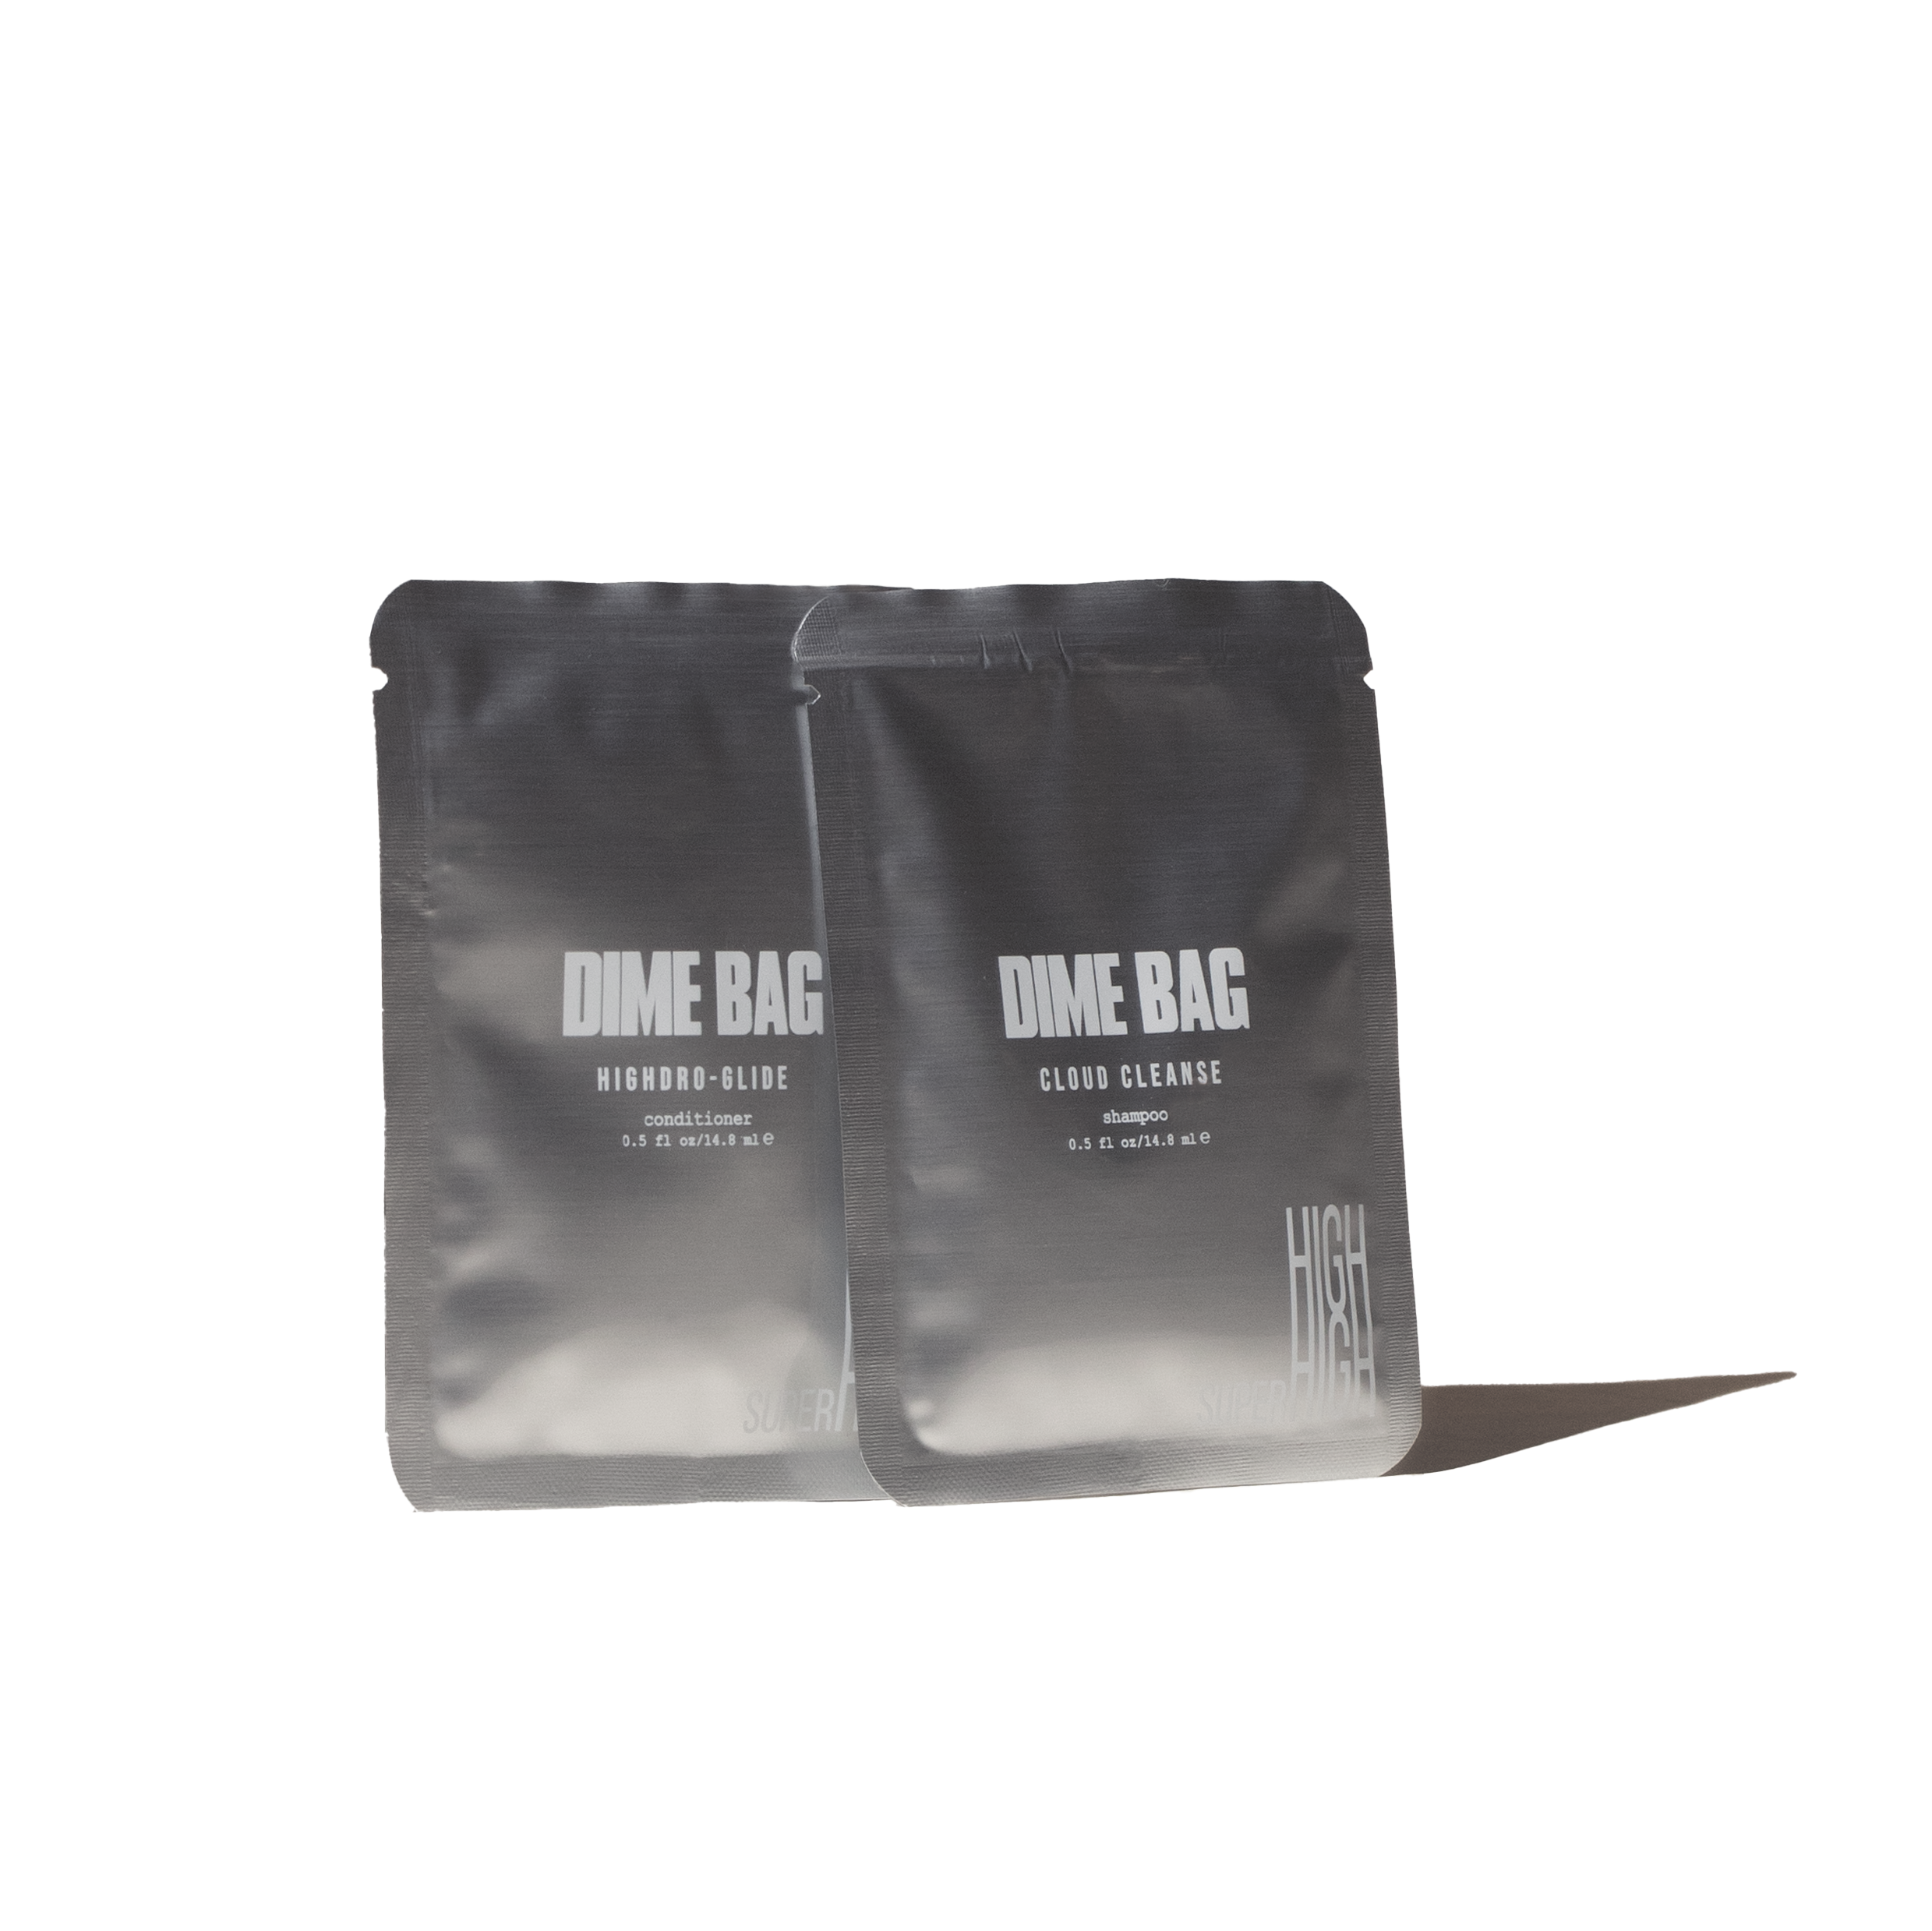 DIME BAG Travel Pack – SUPERHIGH